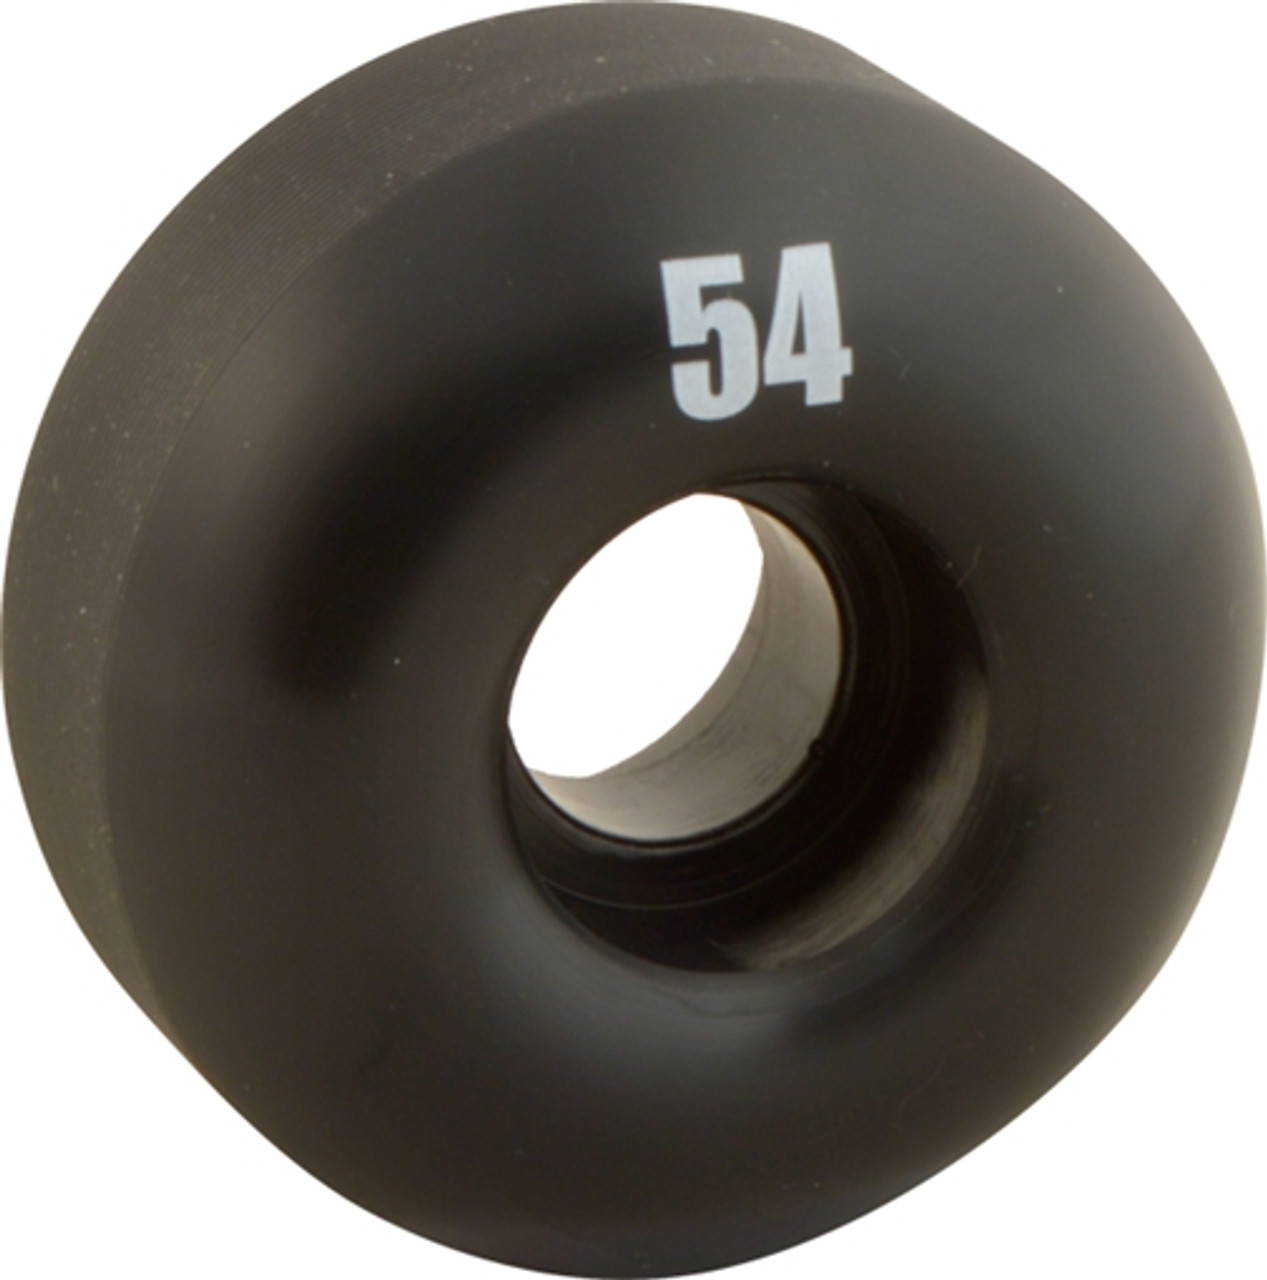 ESSENTIALS BLACK 54mm  Skateboard Wheels